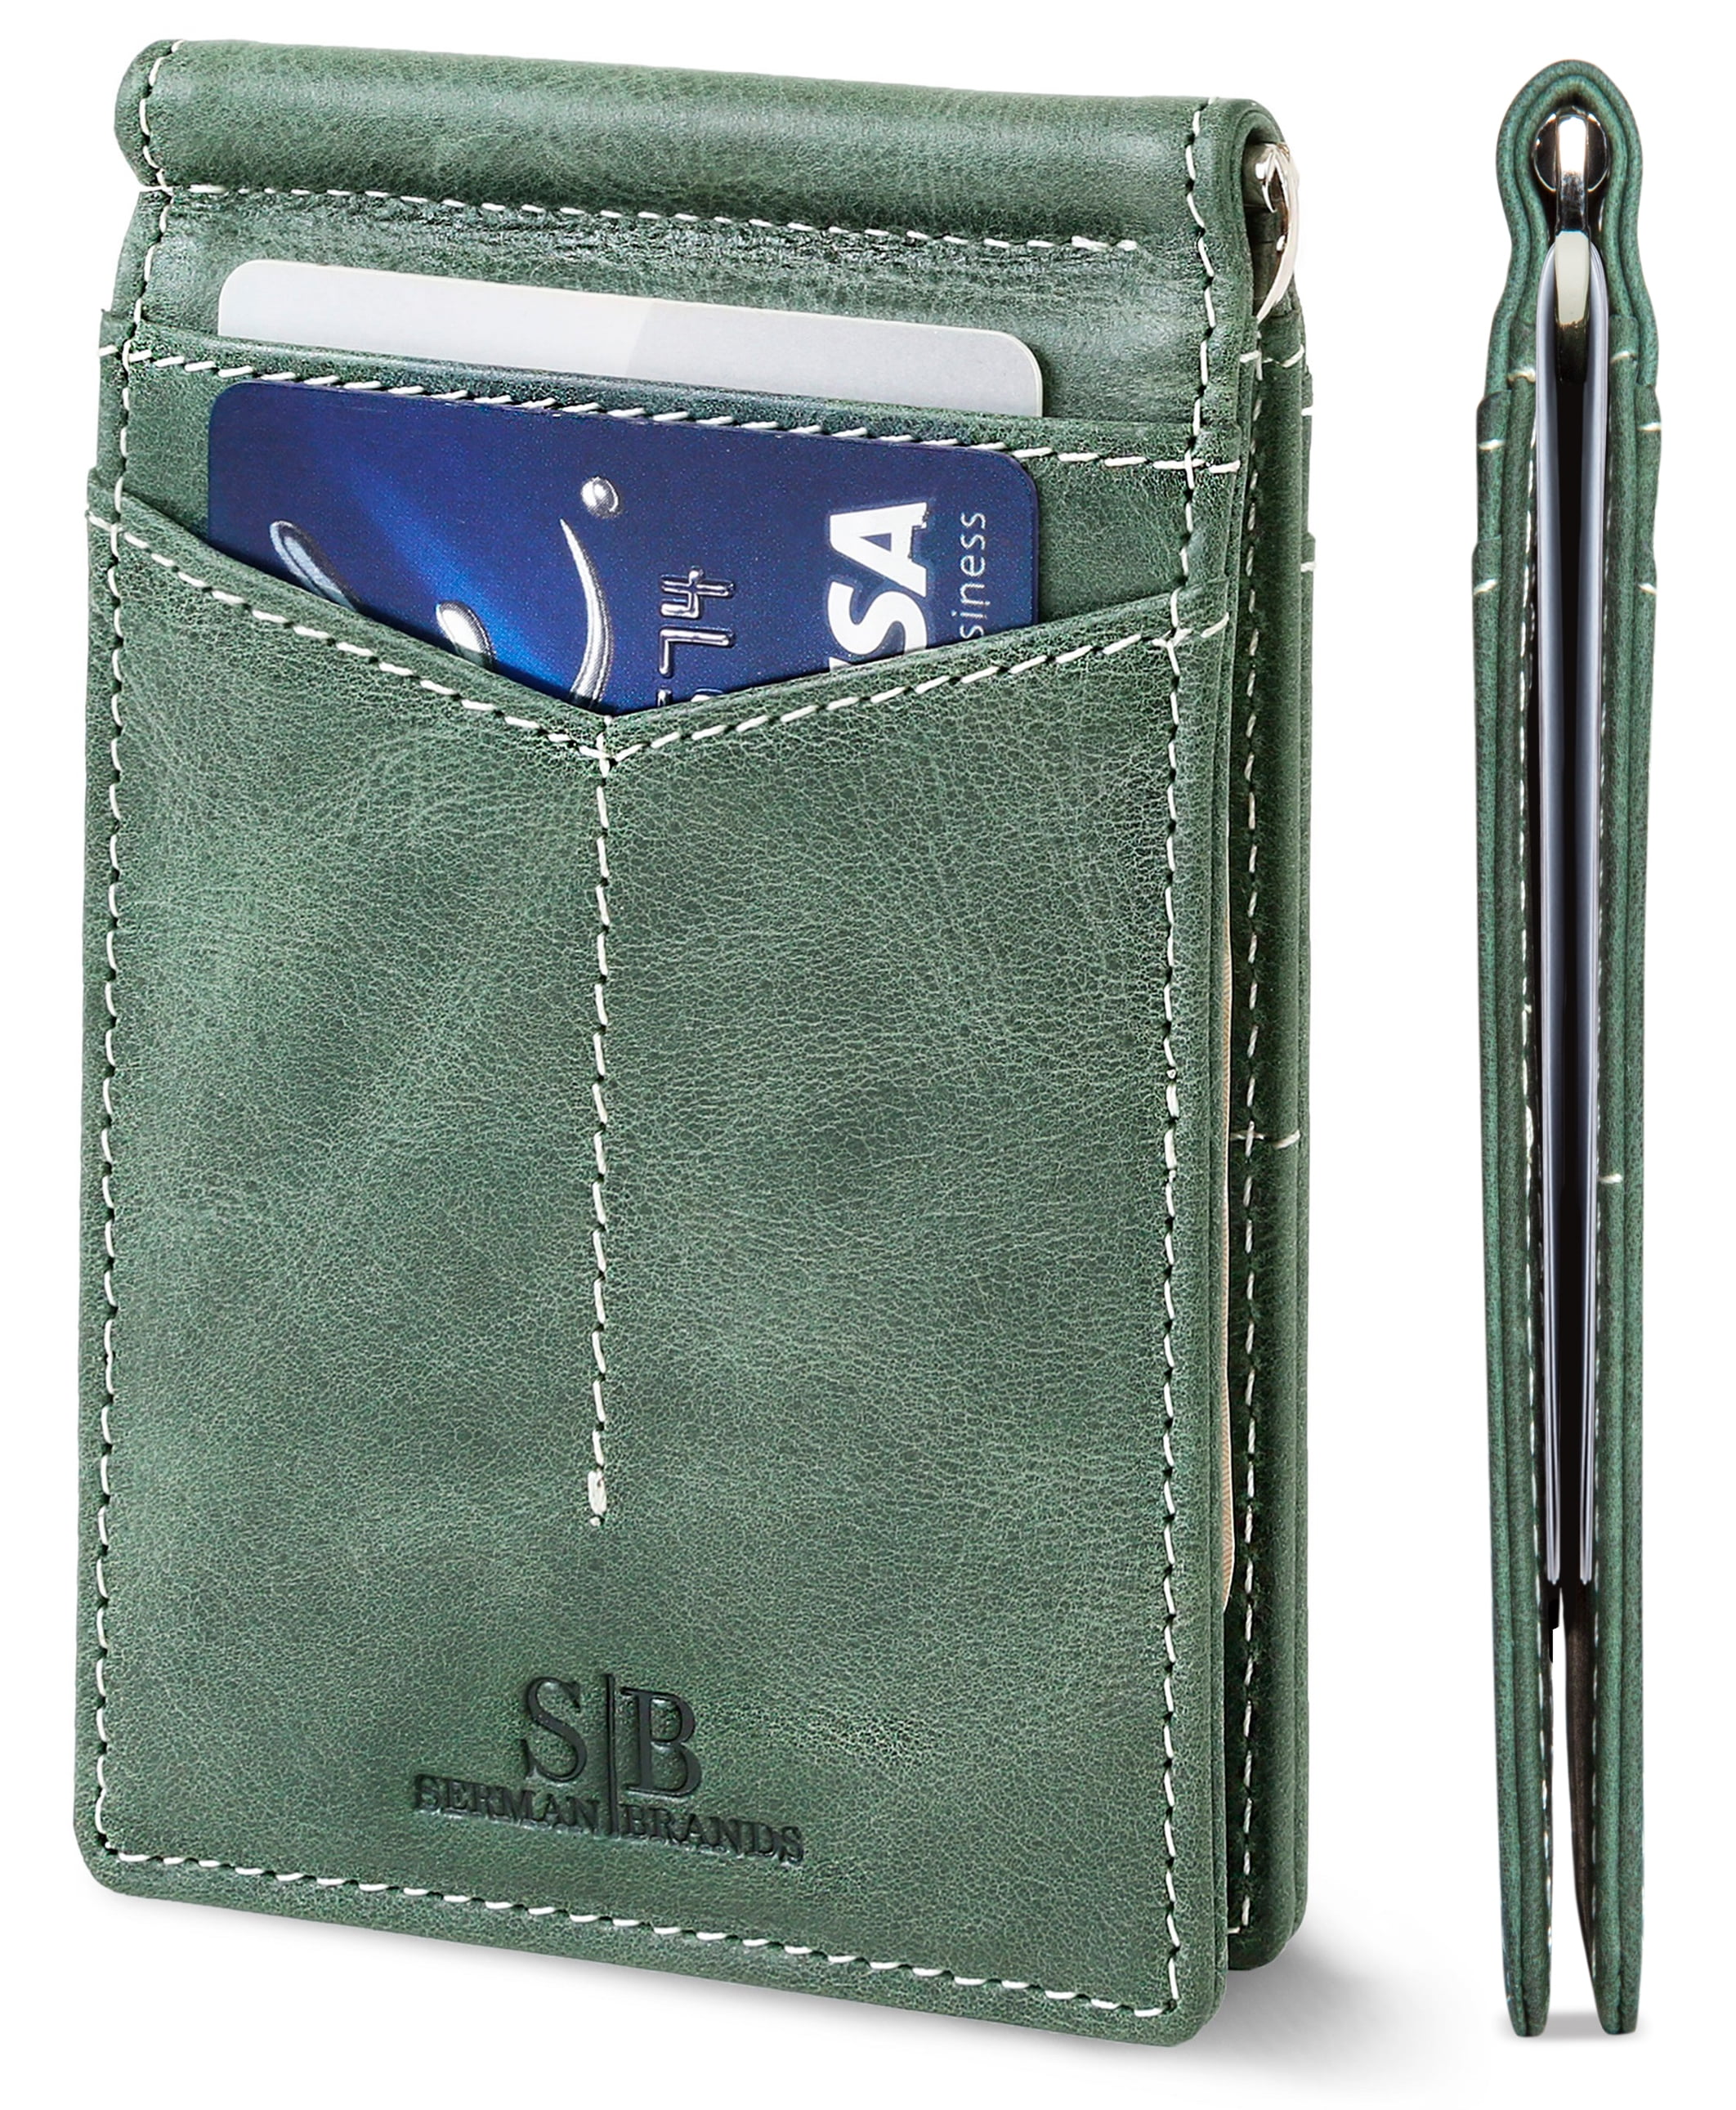 YBONNE New Slim Wallet with Money Clip Finest Genuine Leather RFID Blocking 